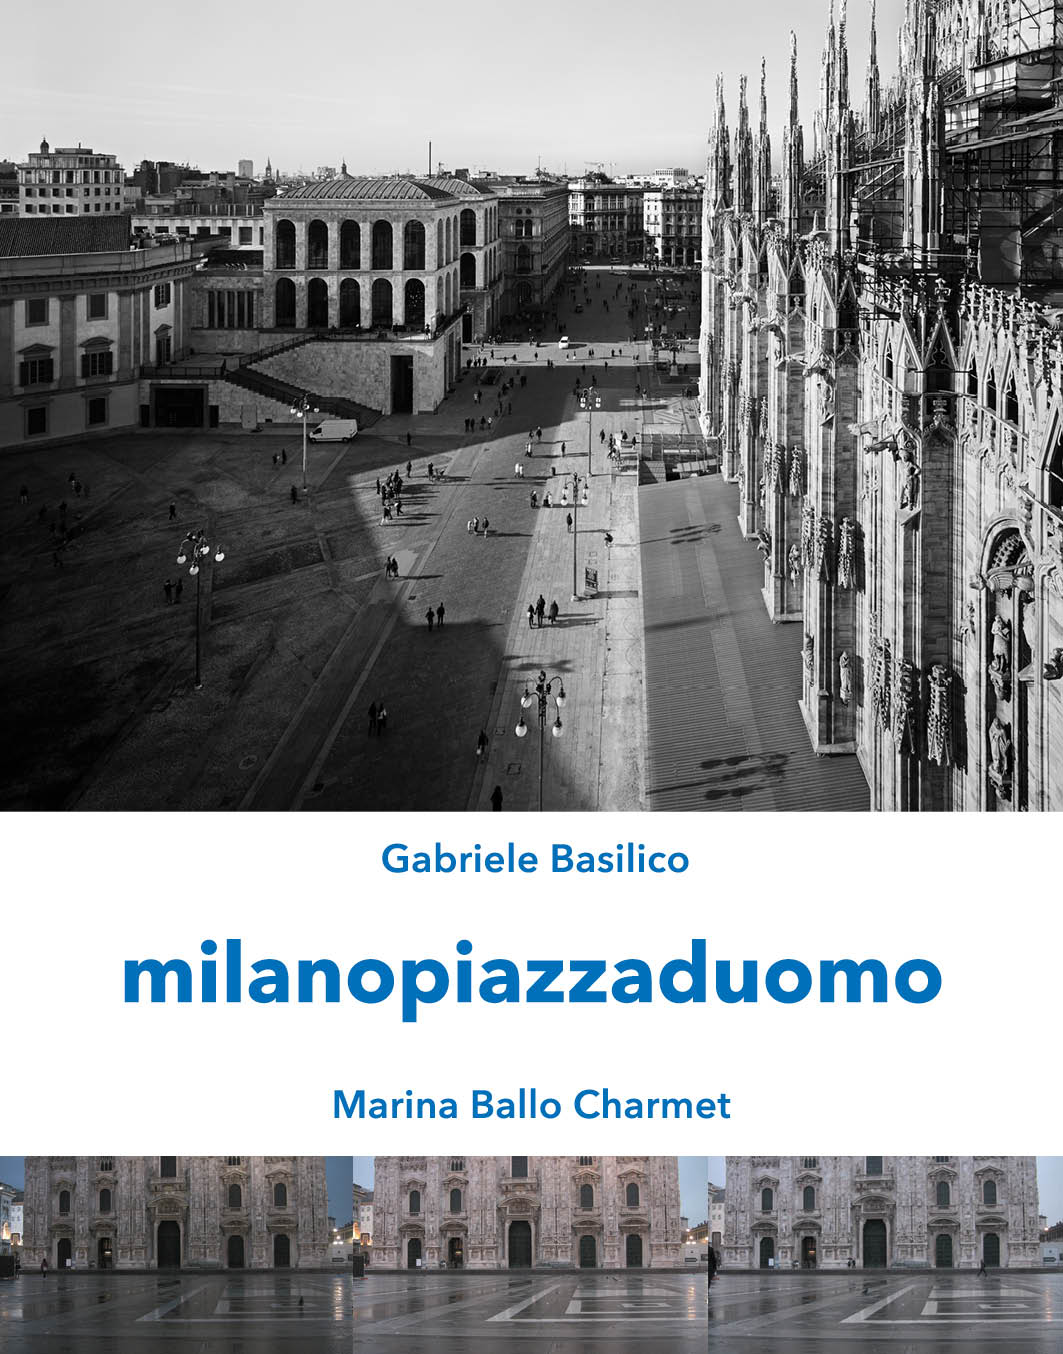 Marina Ballo Charmet / Gabriele Basilico - milanopiazzaduomo